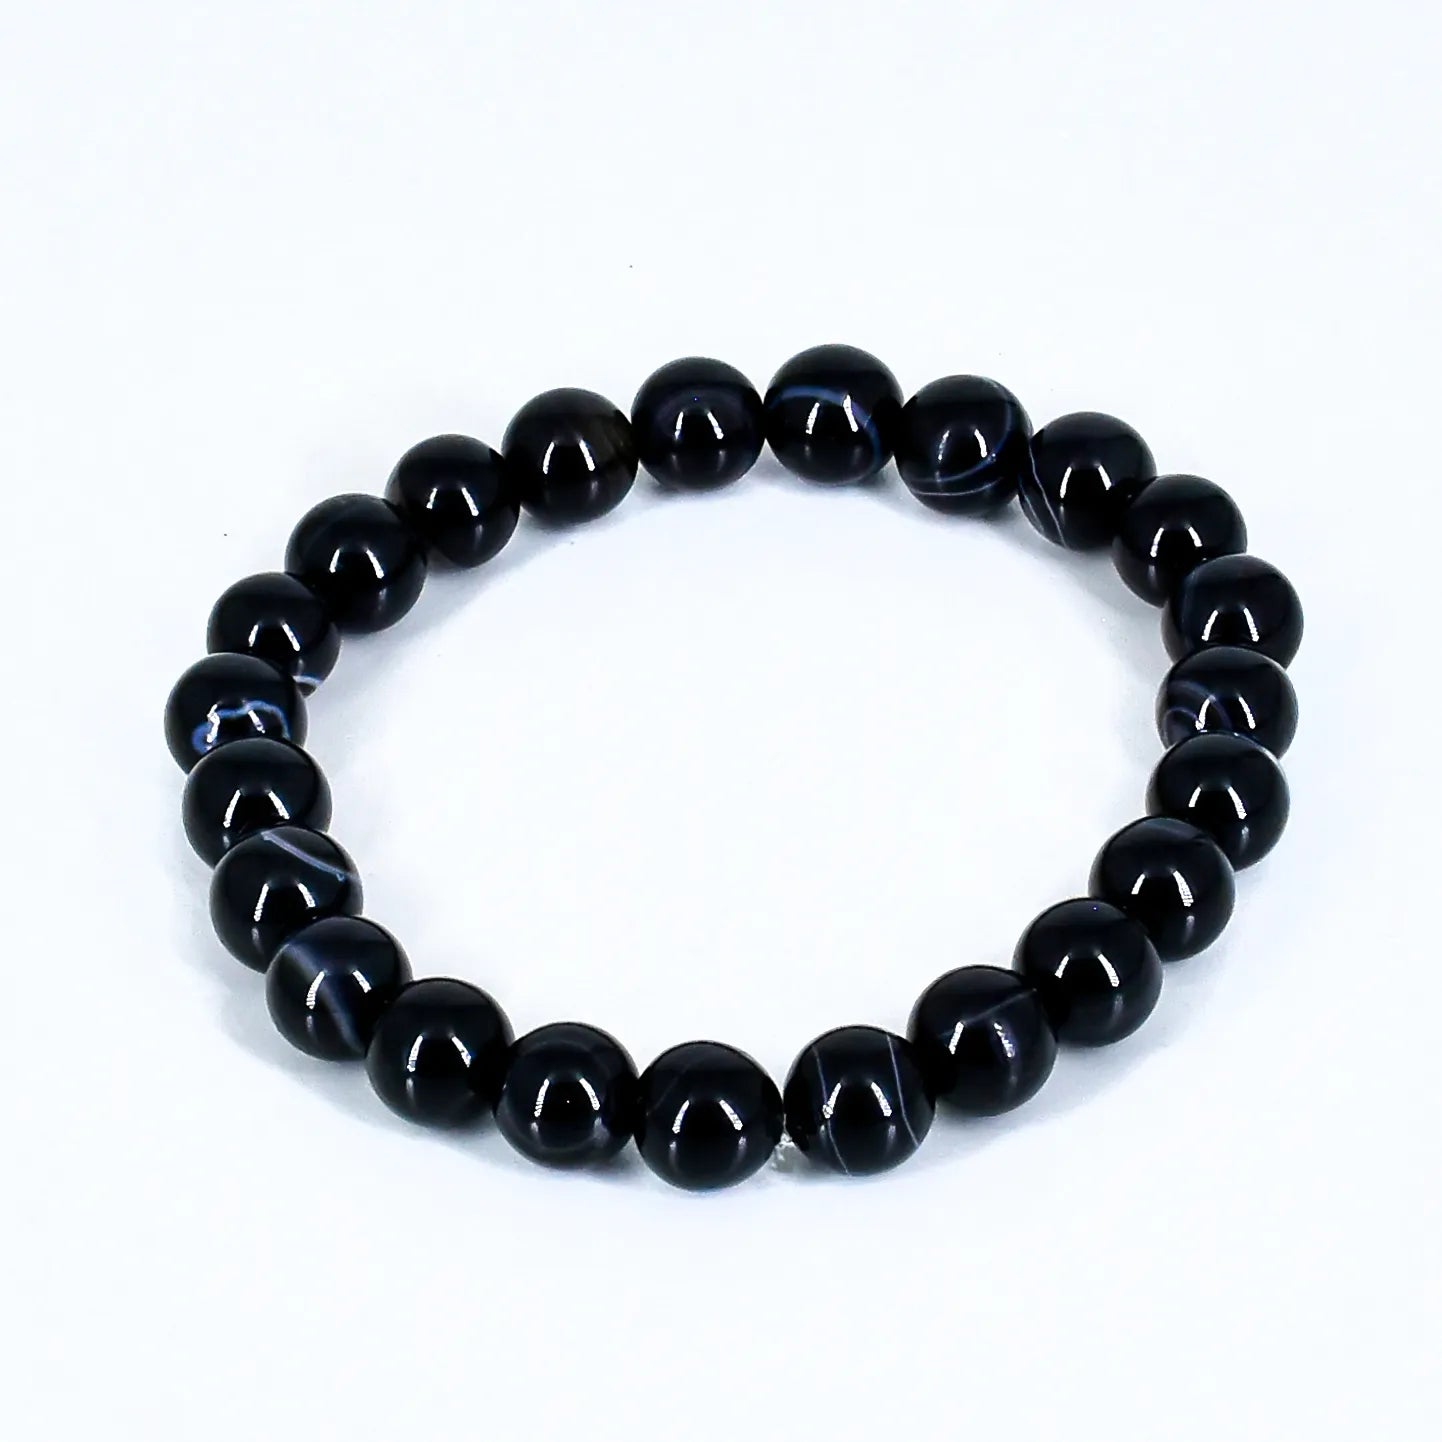 Black Sulemani crystal stone bracelet for Meditation and yoga 